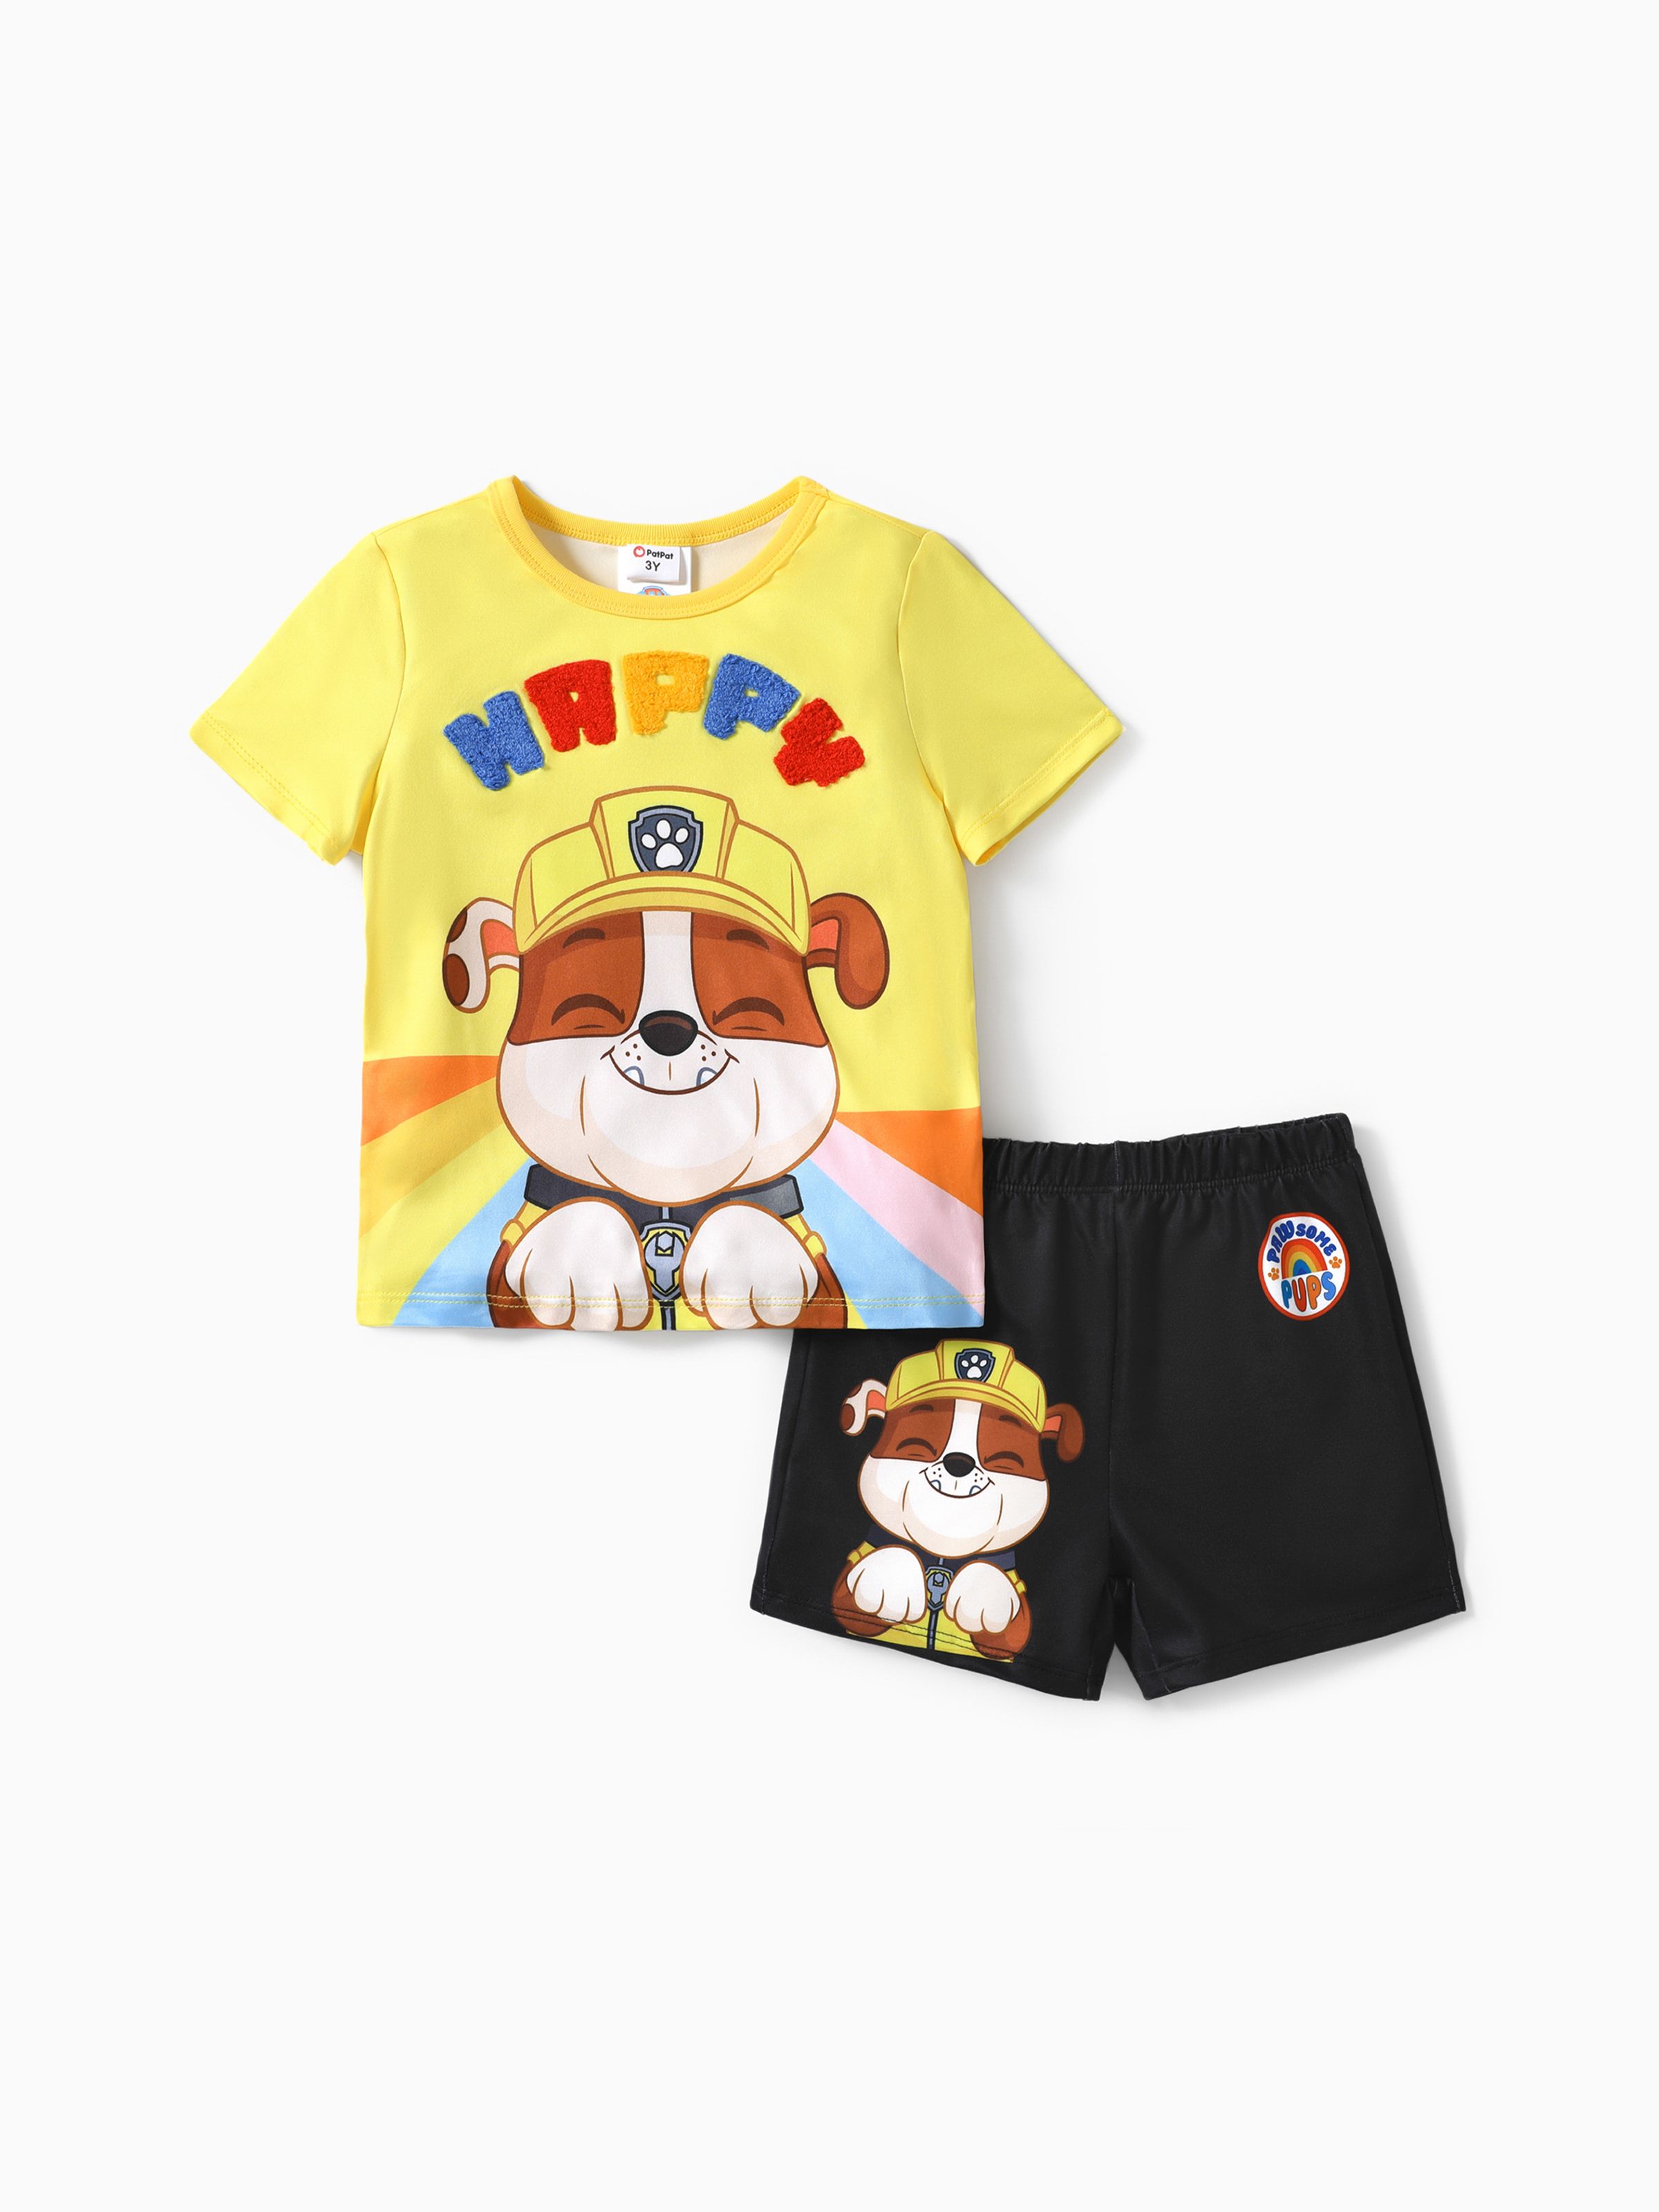 

PAW Patrol Toddler Girls/Boys 2pcs Character Rainbow Print T-shirt with Shorts Sporty Set